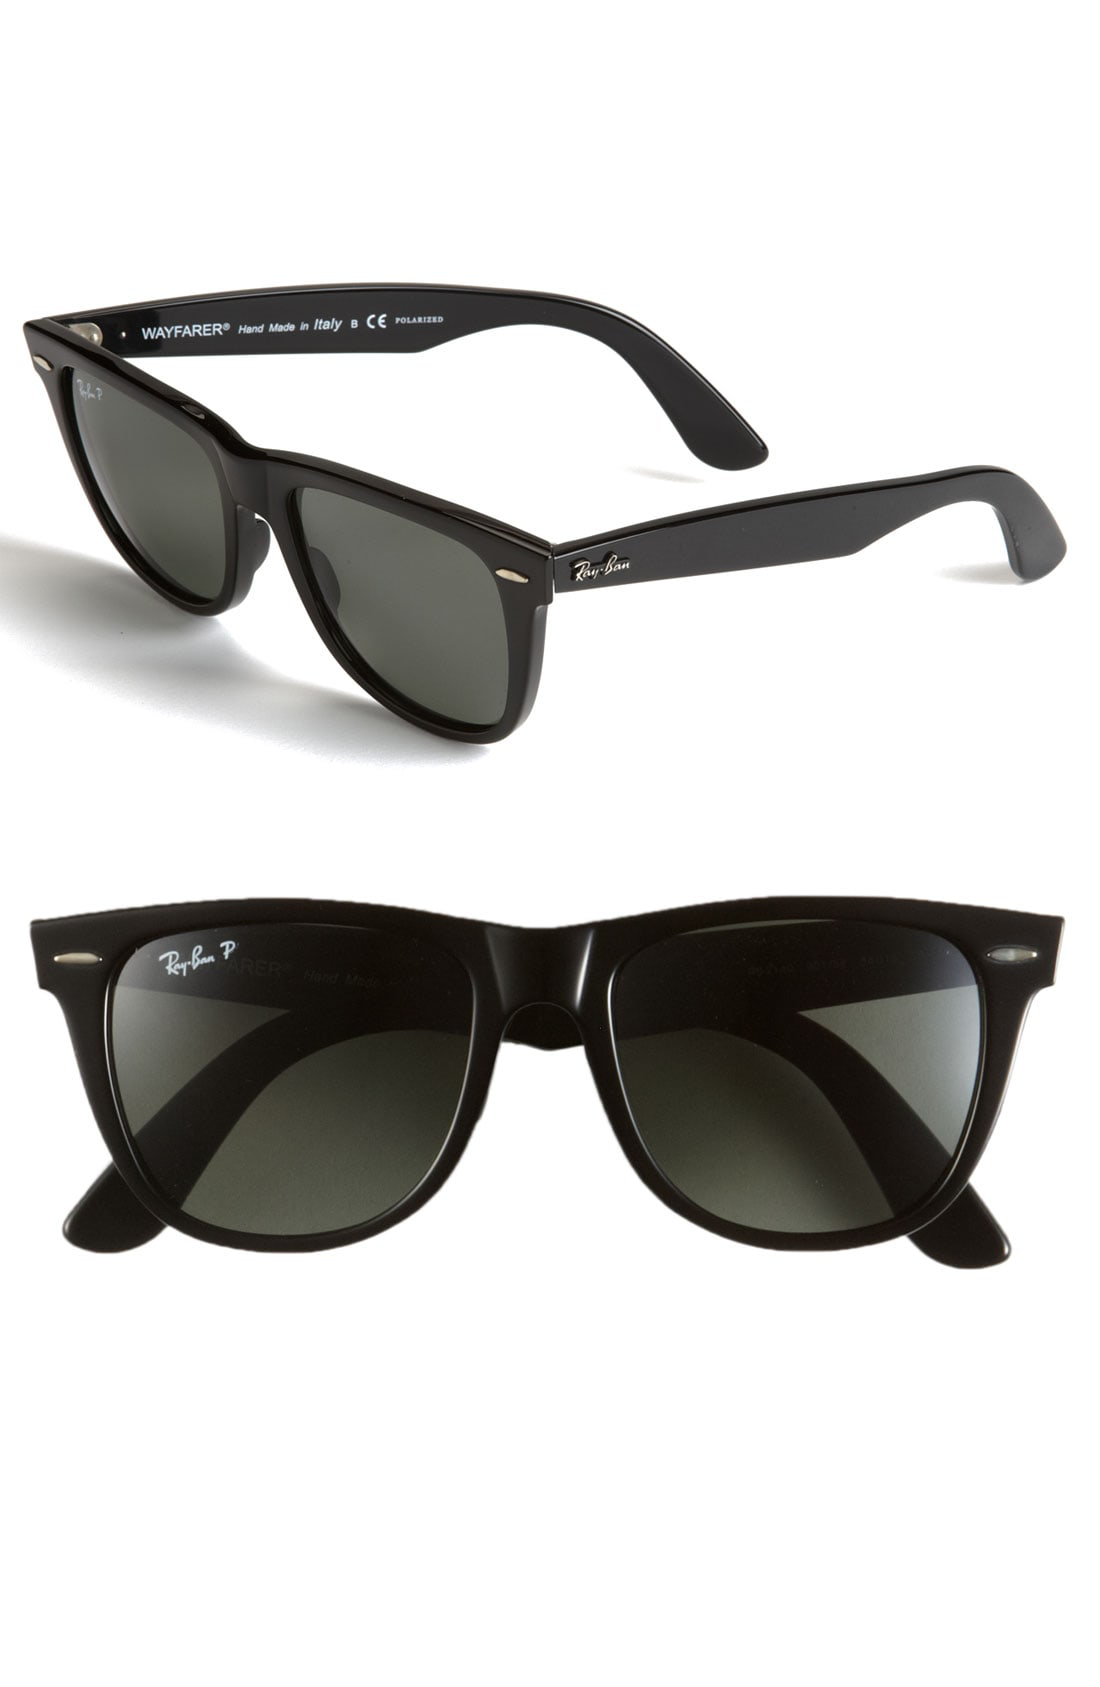 Ray Ban Classic Wayfarer Polarized 54mm Sunglasses - Black | ModeSens